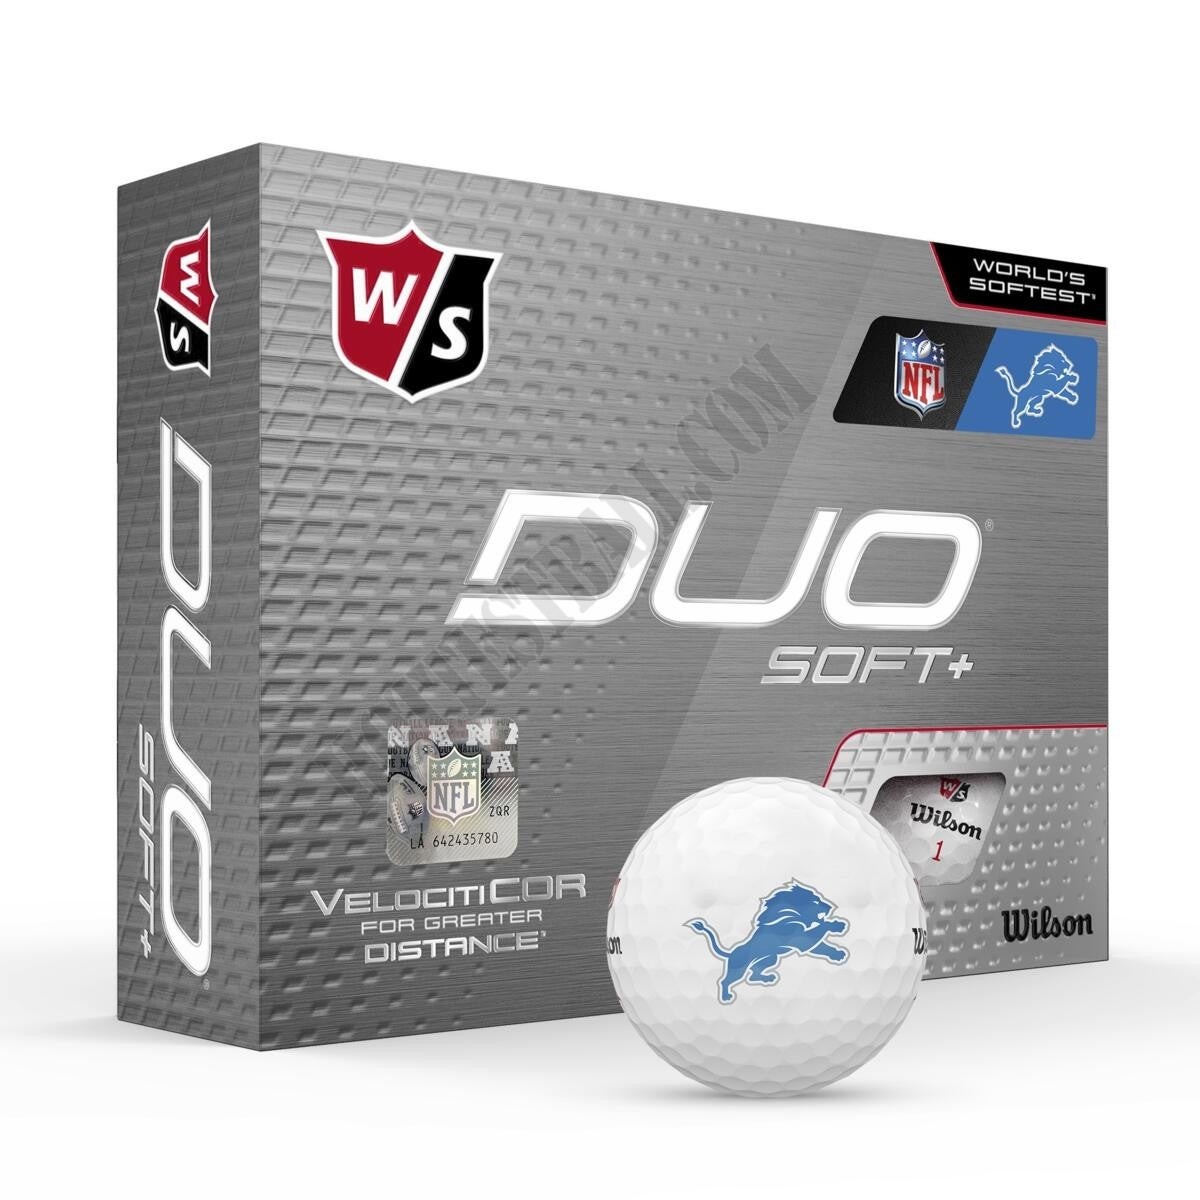 Duo Soft+ NFL Golf Balls - Detroit Lions ● Wilson Promotions - Duo Soft+ NFL Golf Balls - Detroit Lions ● Wilson Promotions